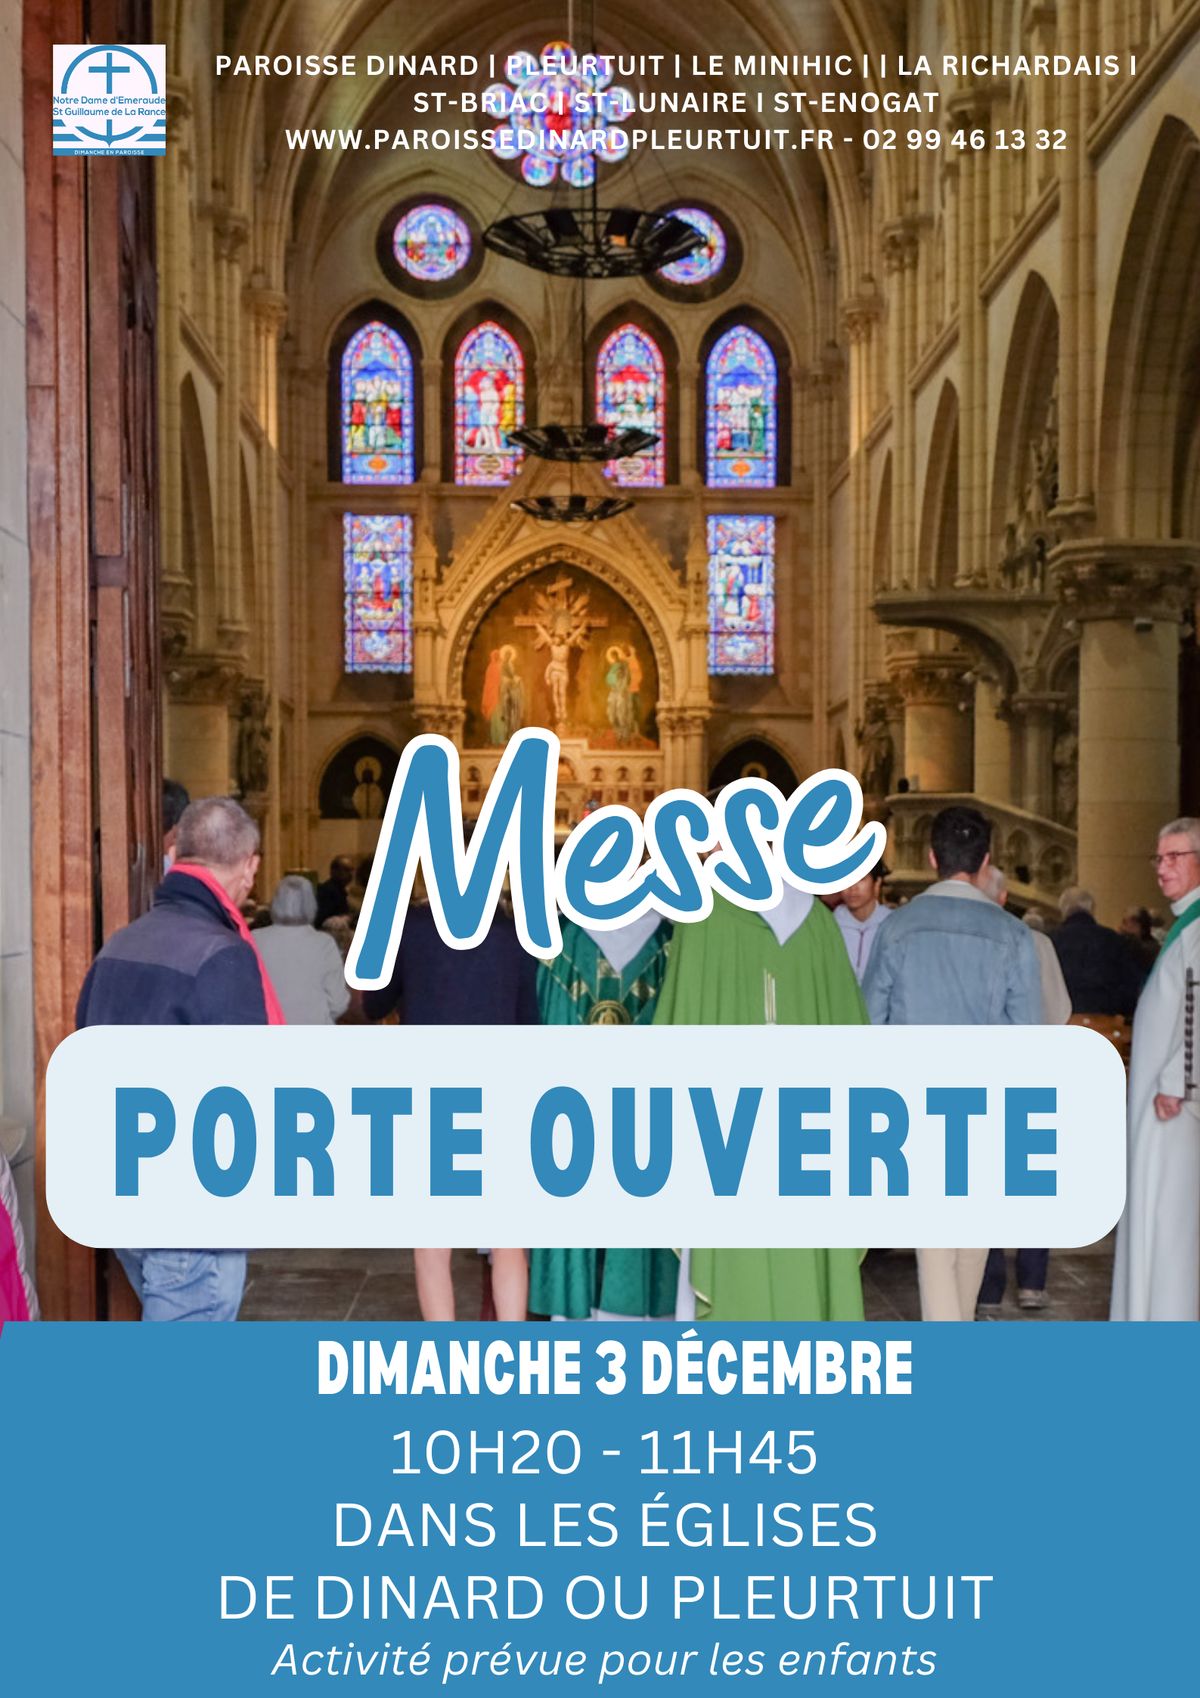 Messe Porte Ouverte paroisse Dinard Pleurtuit